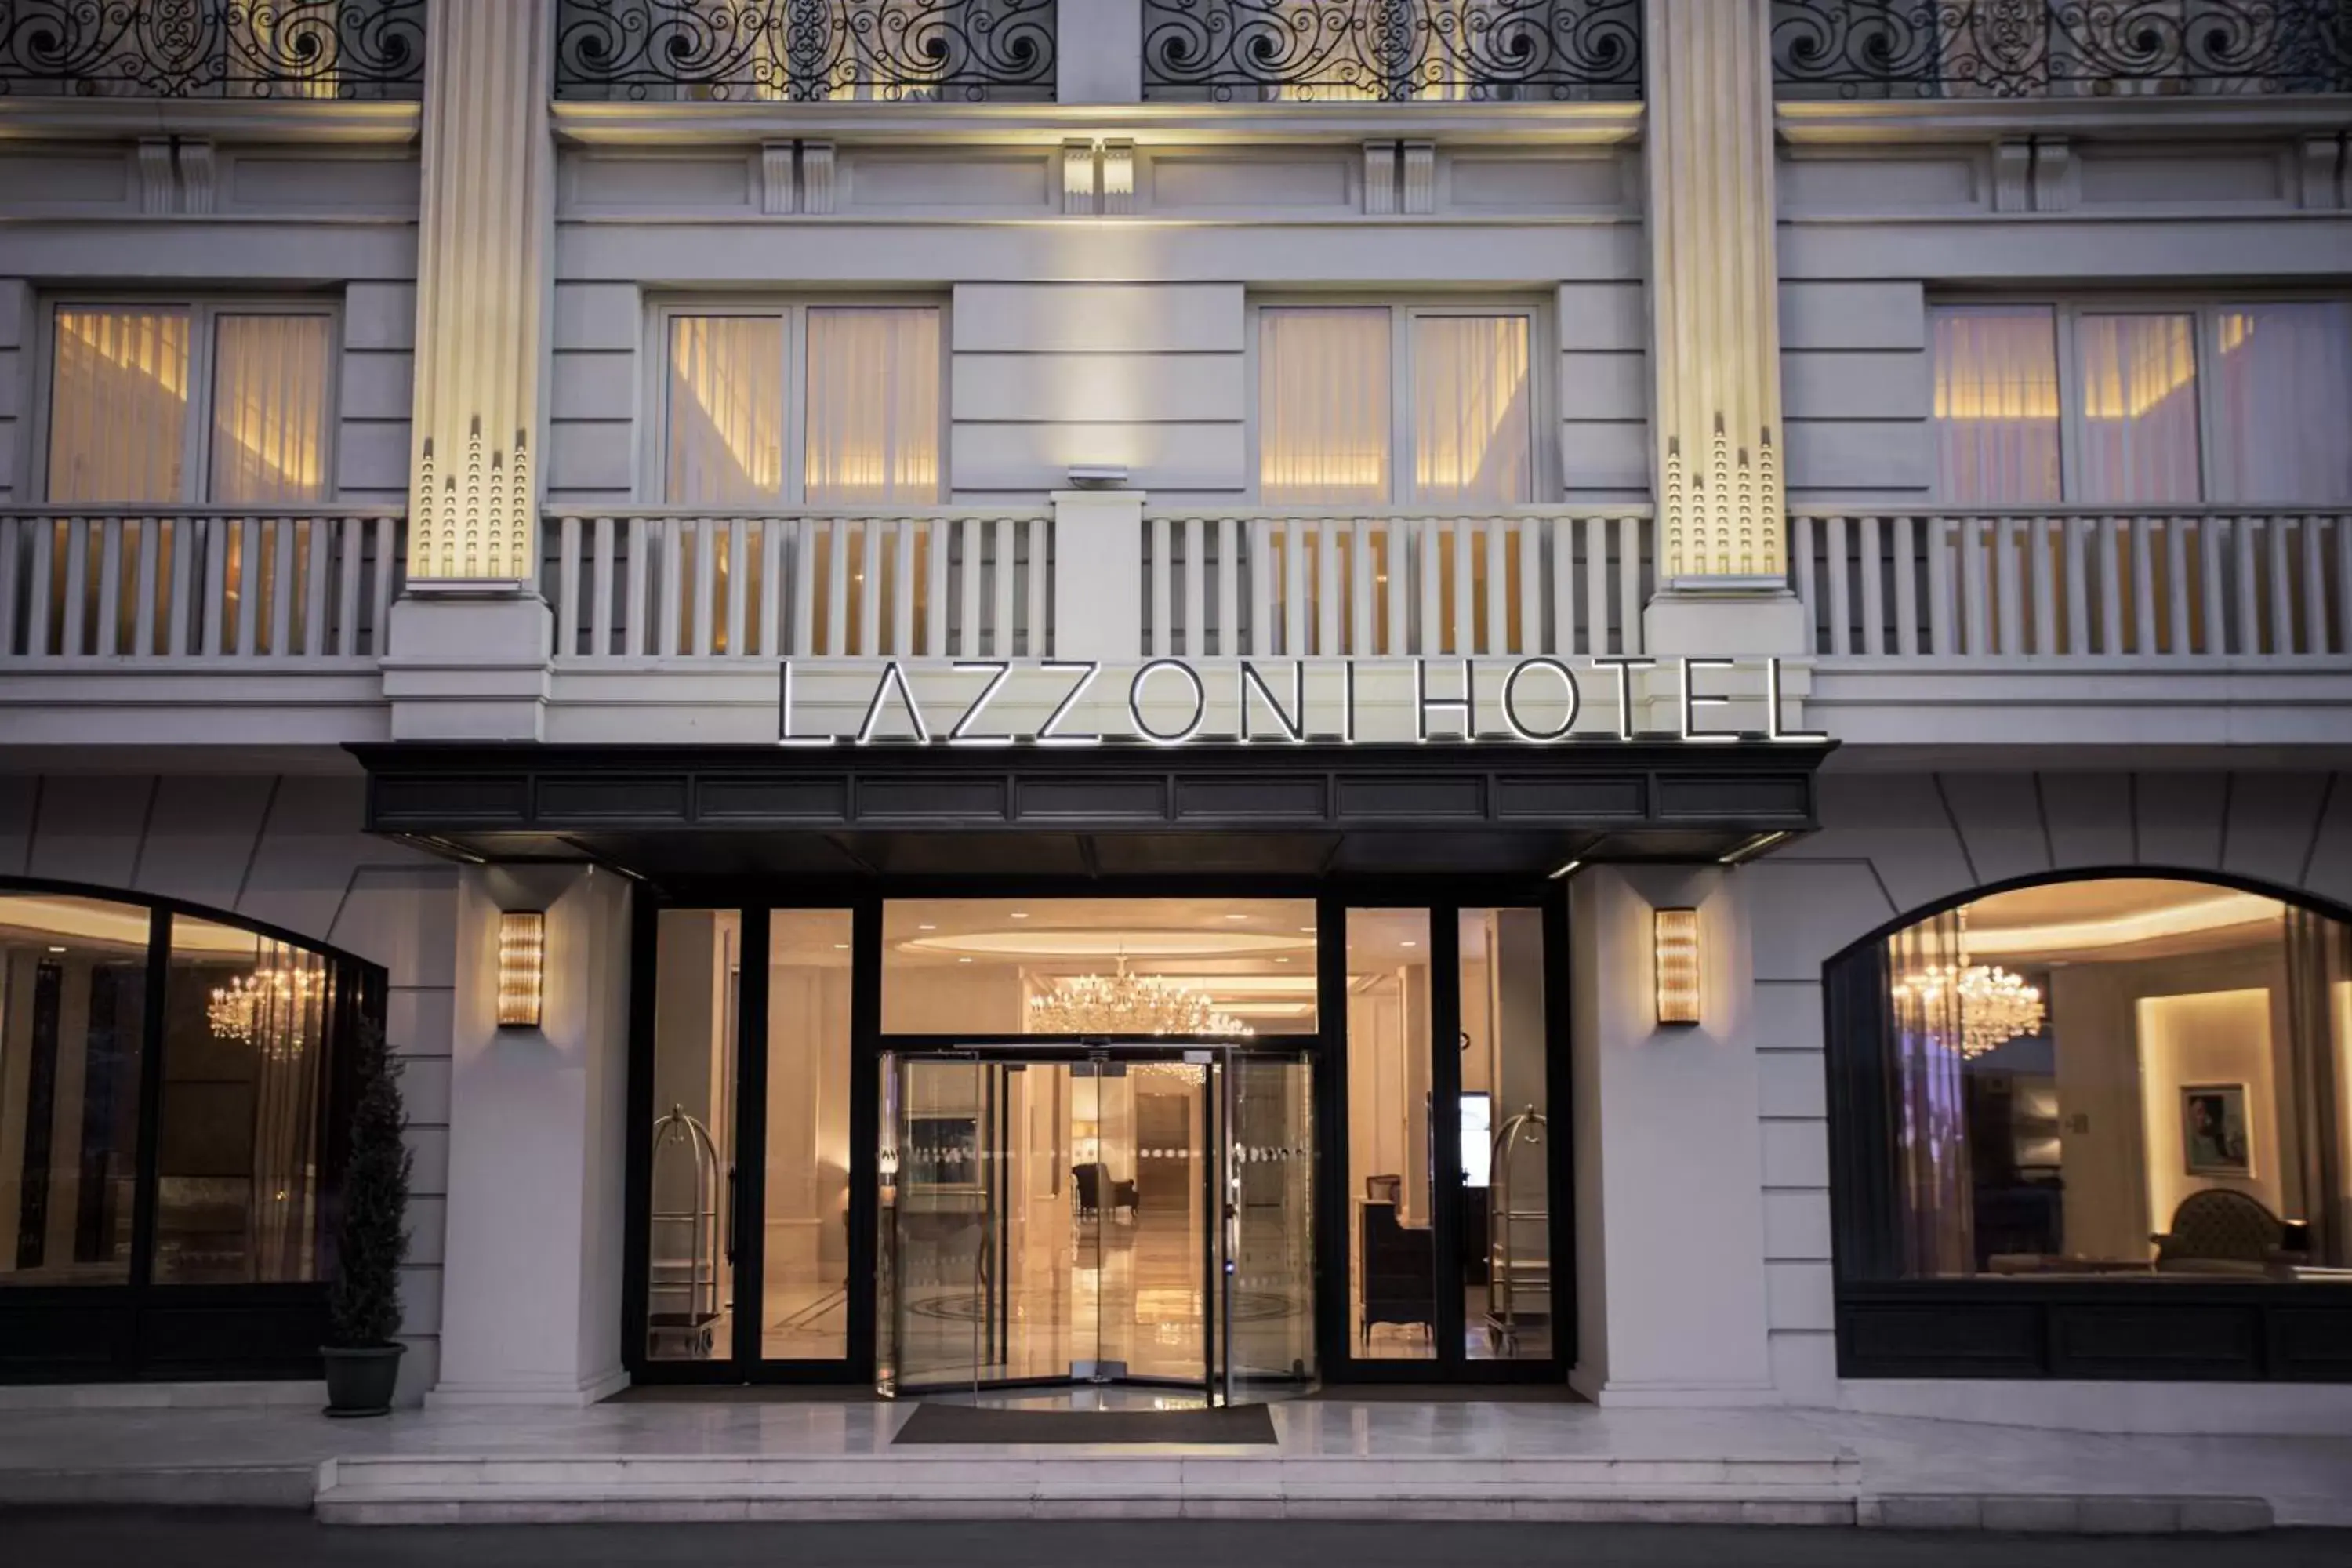 Facade/entrance in Lazzoni Hotel